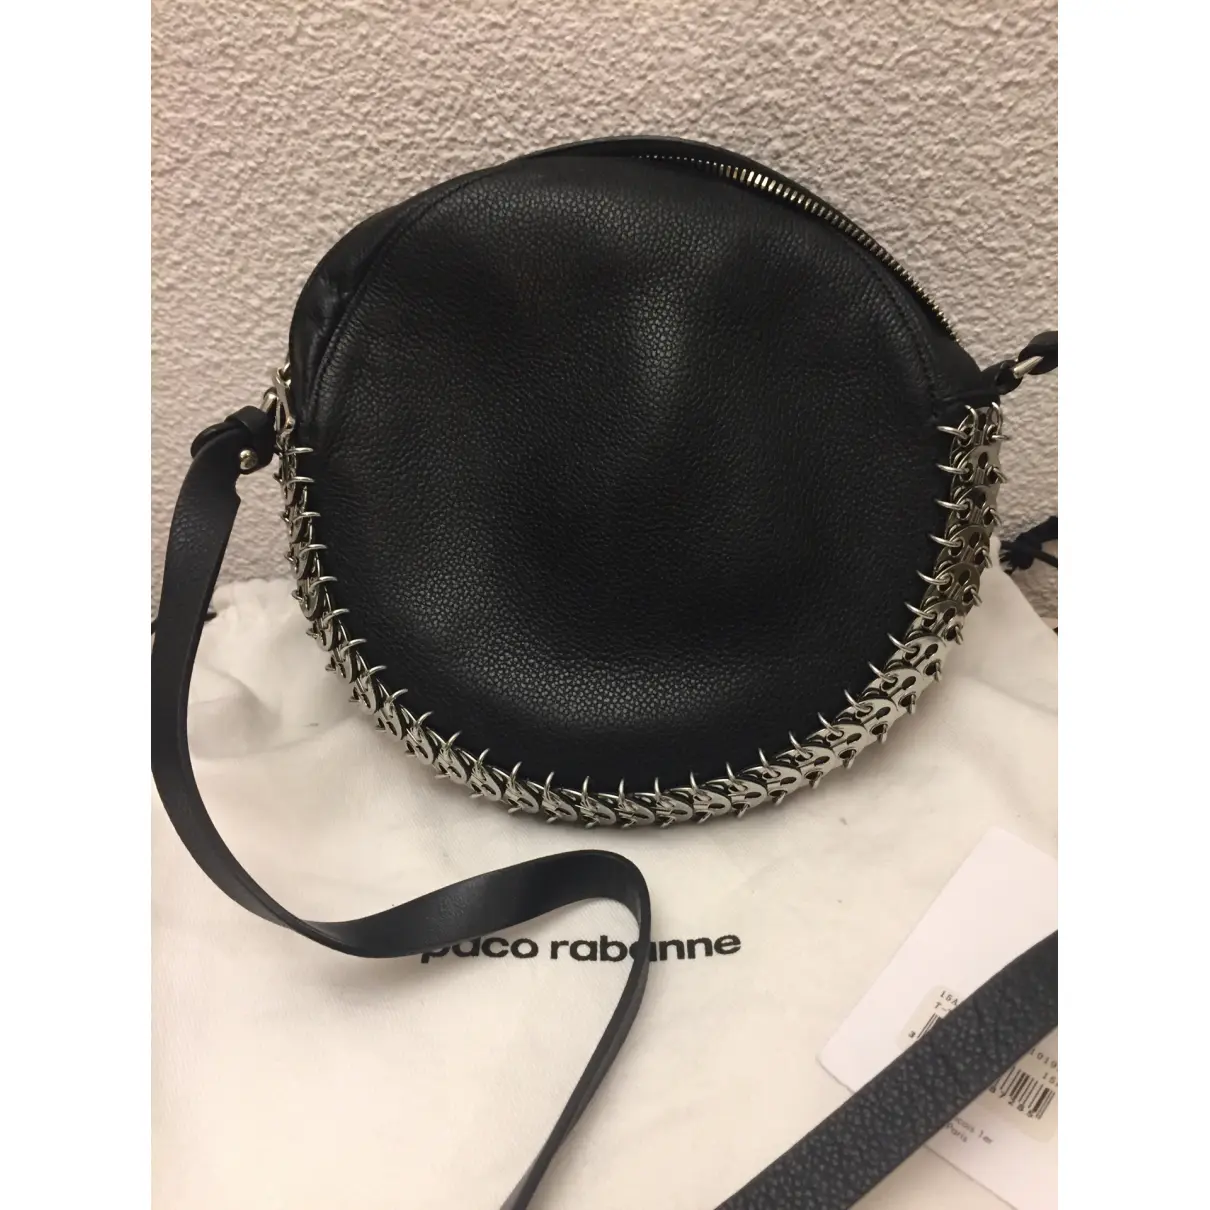 Buy Paco Rabanne Leather handbag online